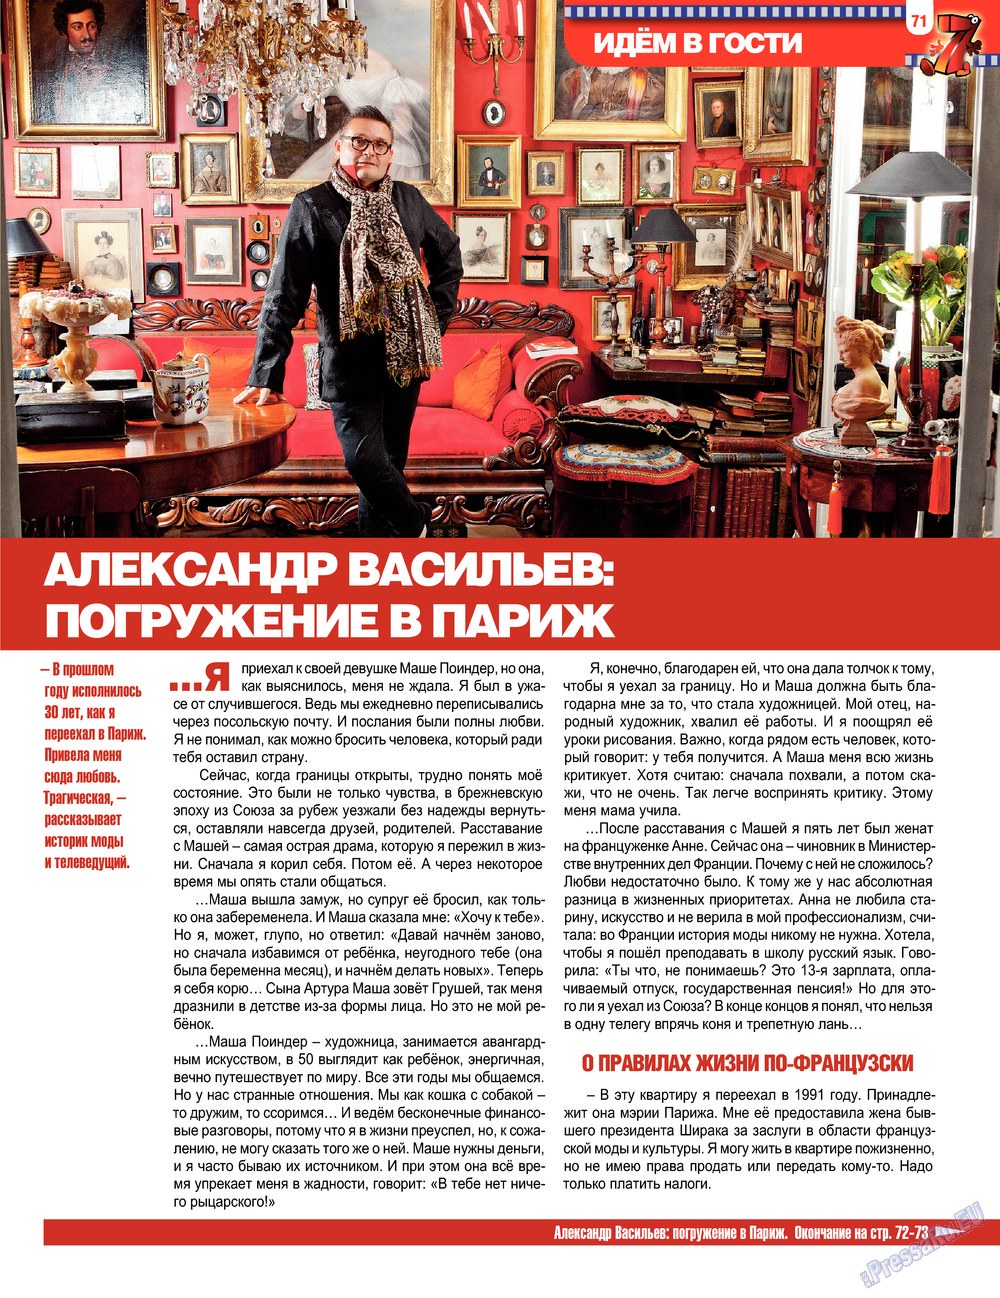 7плюс7я (журнал). 2013 год, номер 12, стр. 71